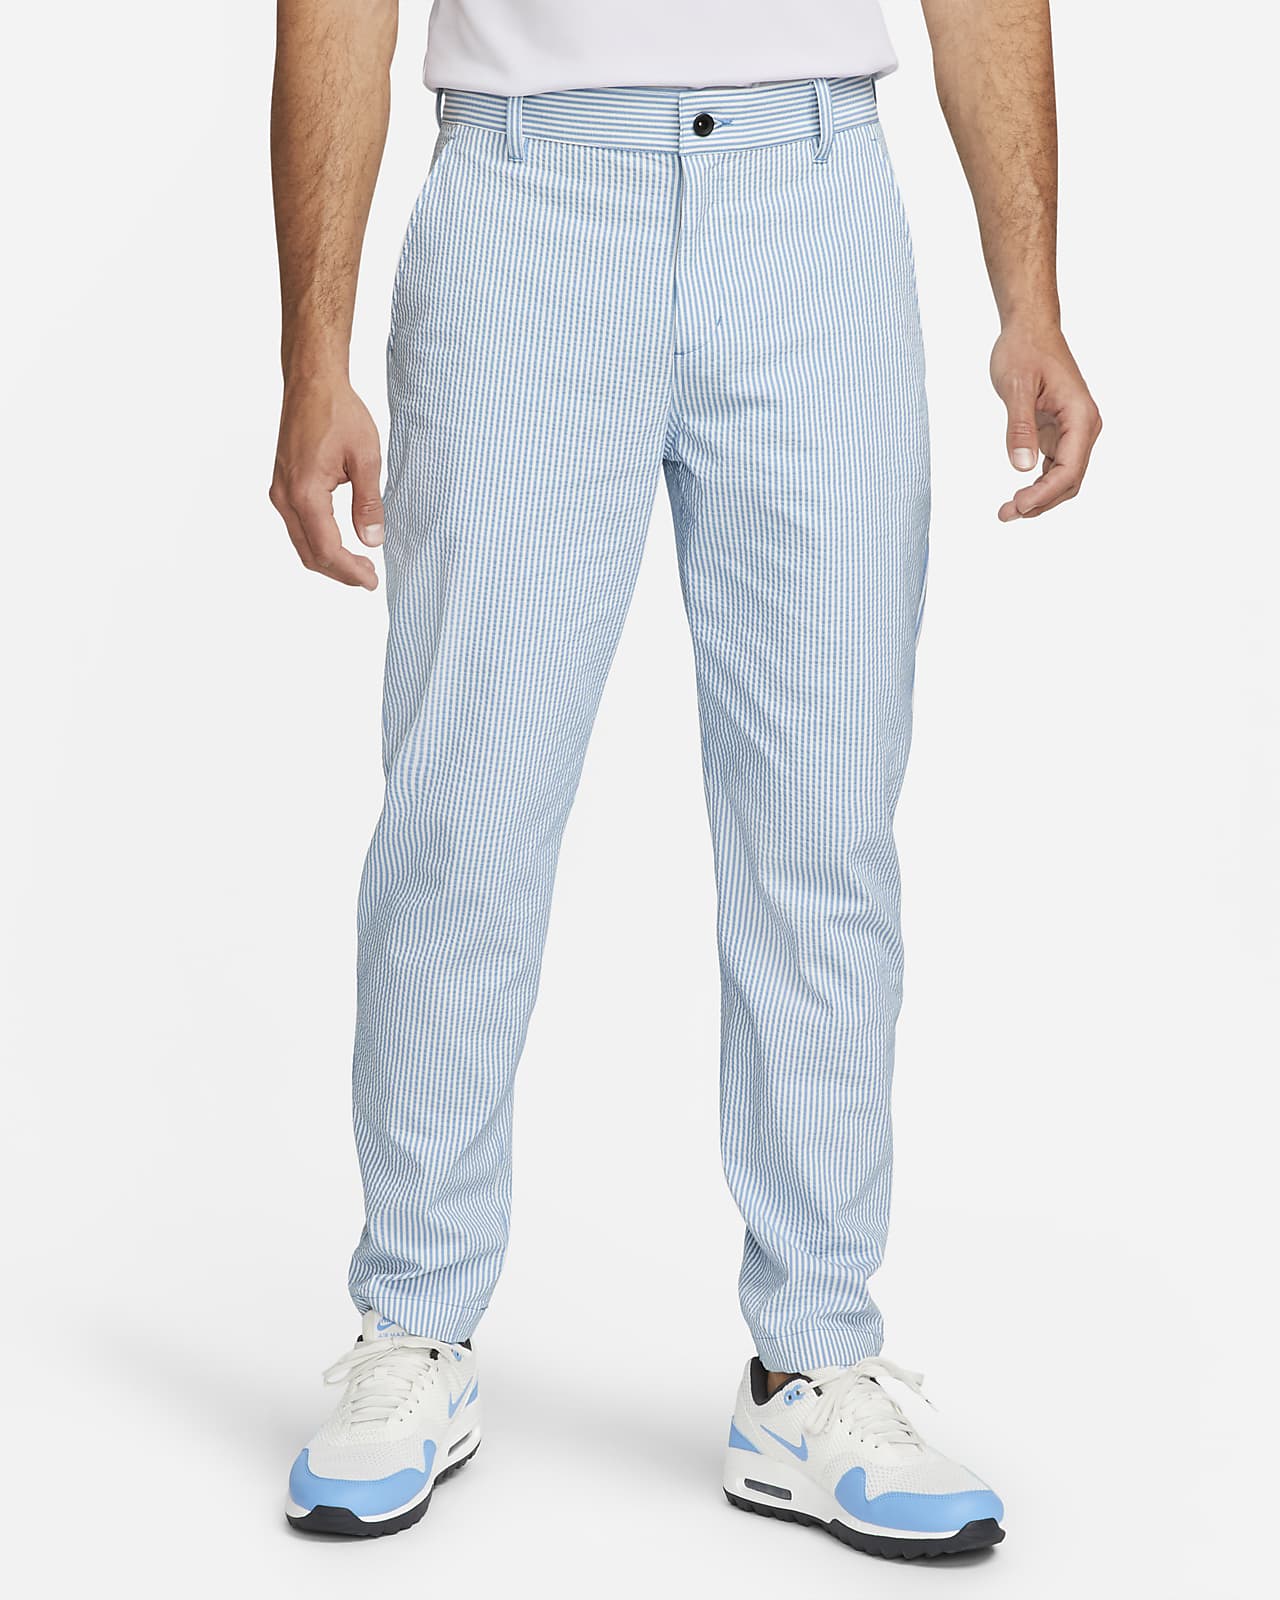 Nike Dri-FIT UV Pantalons Chino de teixit Seersucker - Home